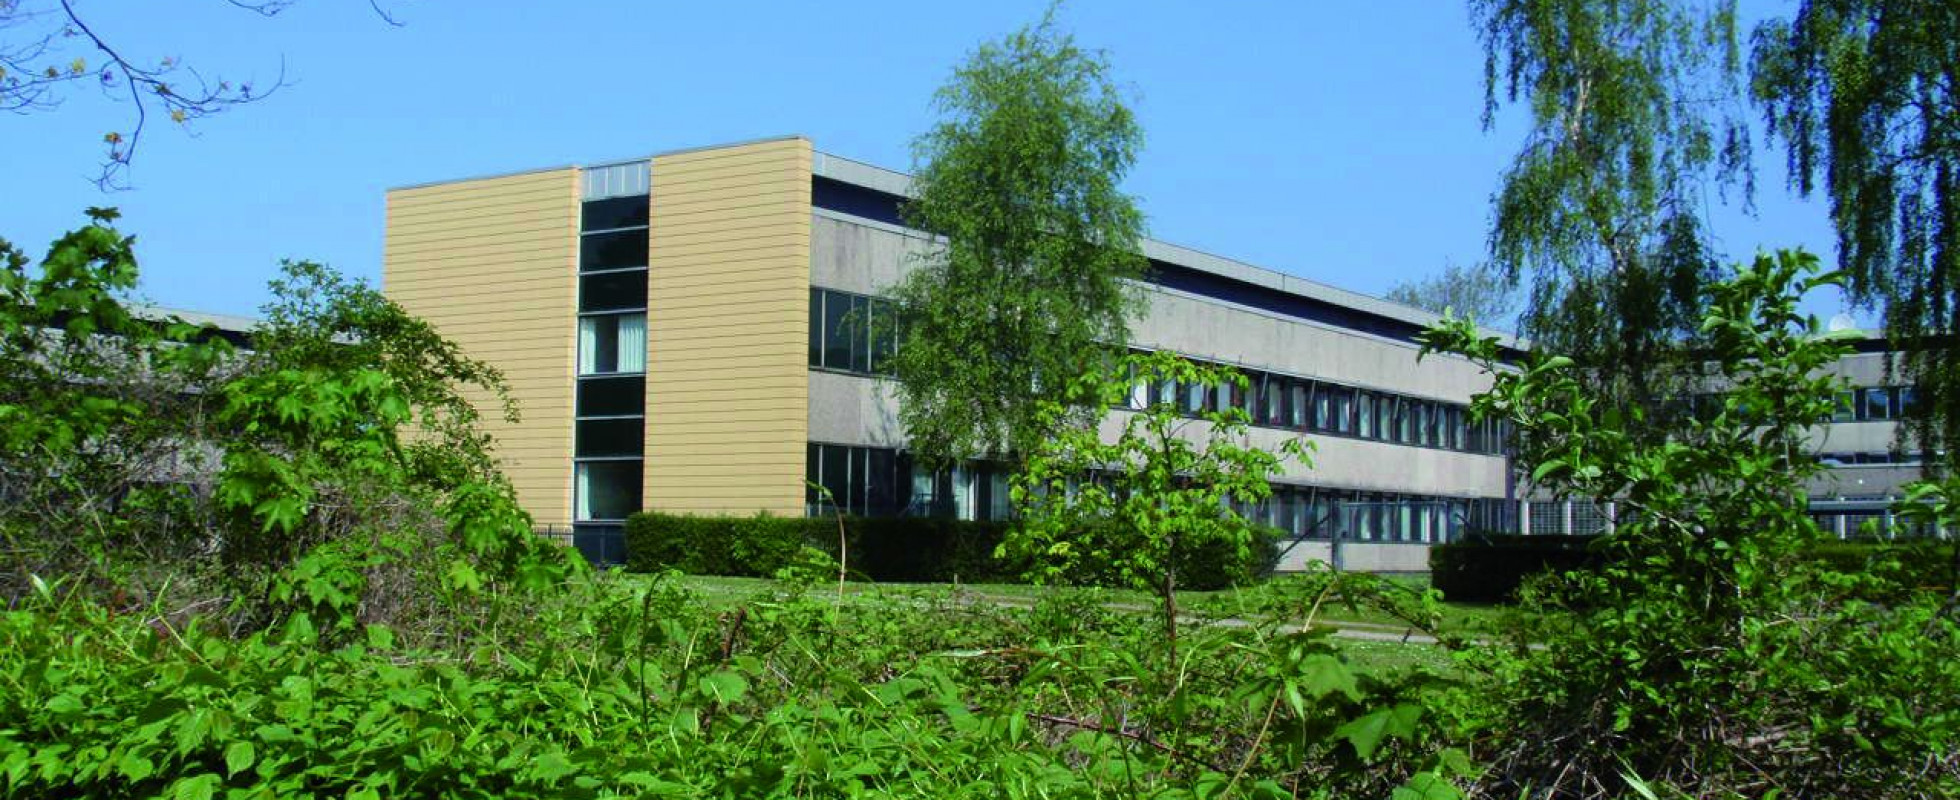 Aarhus Universitetshospital Risskov, Ny kontorafdeling 